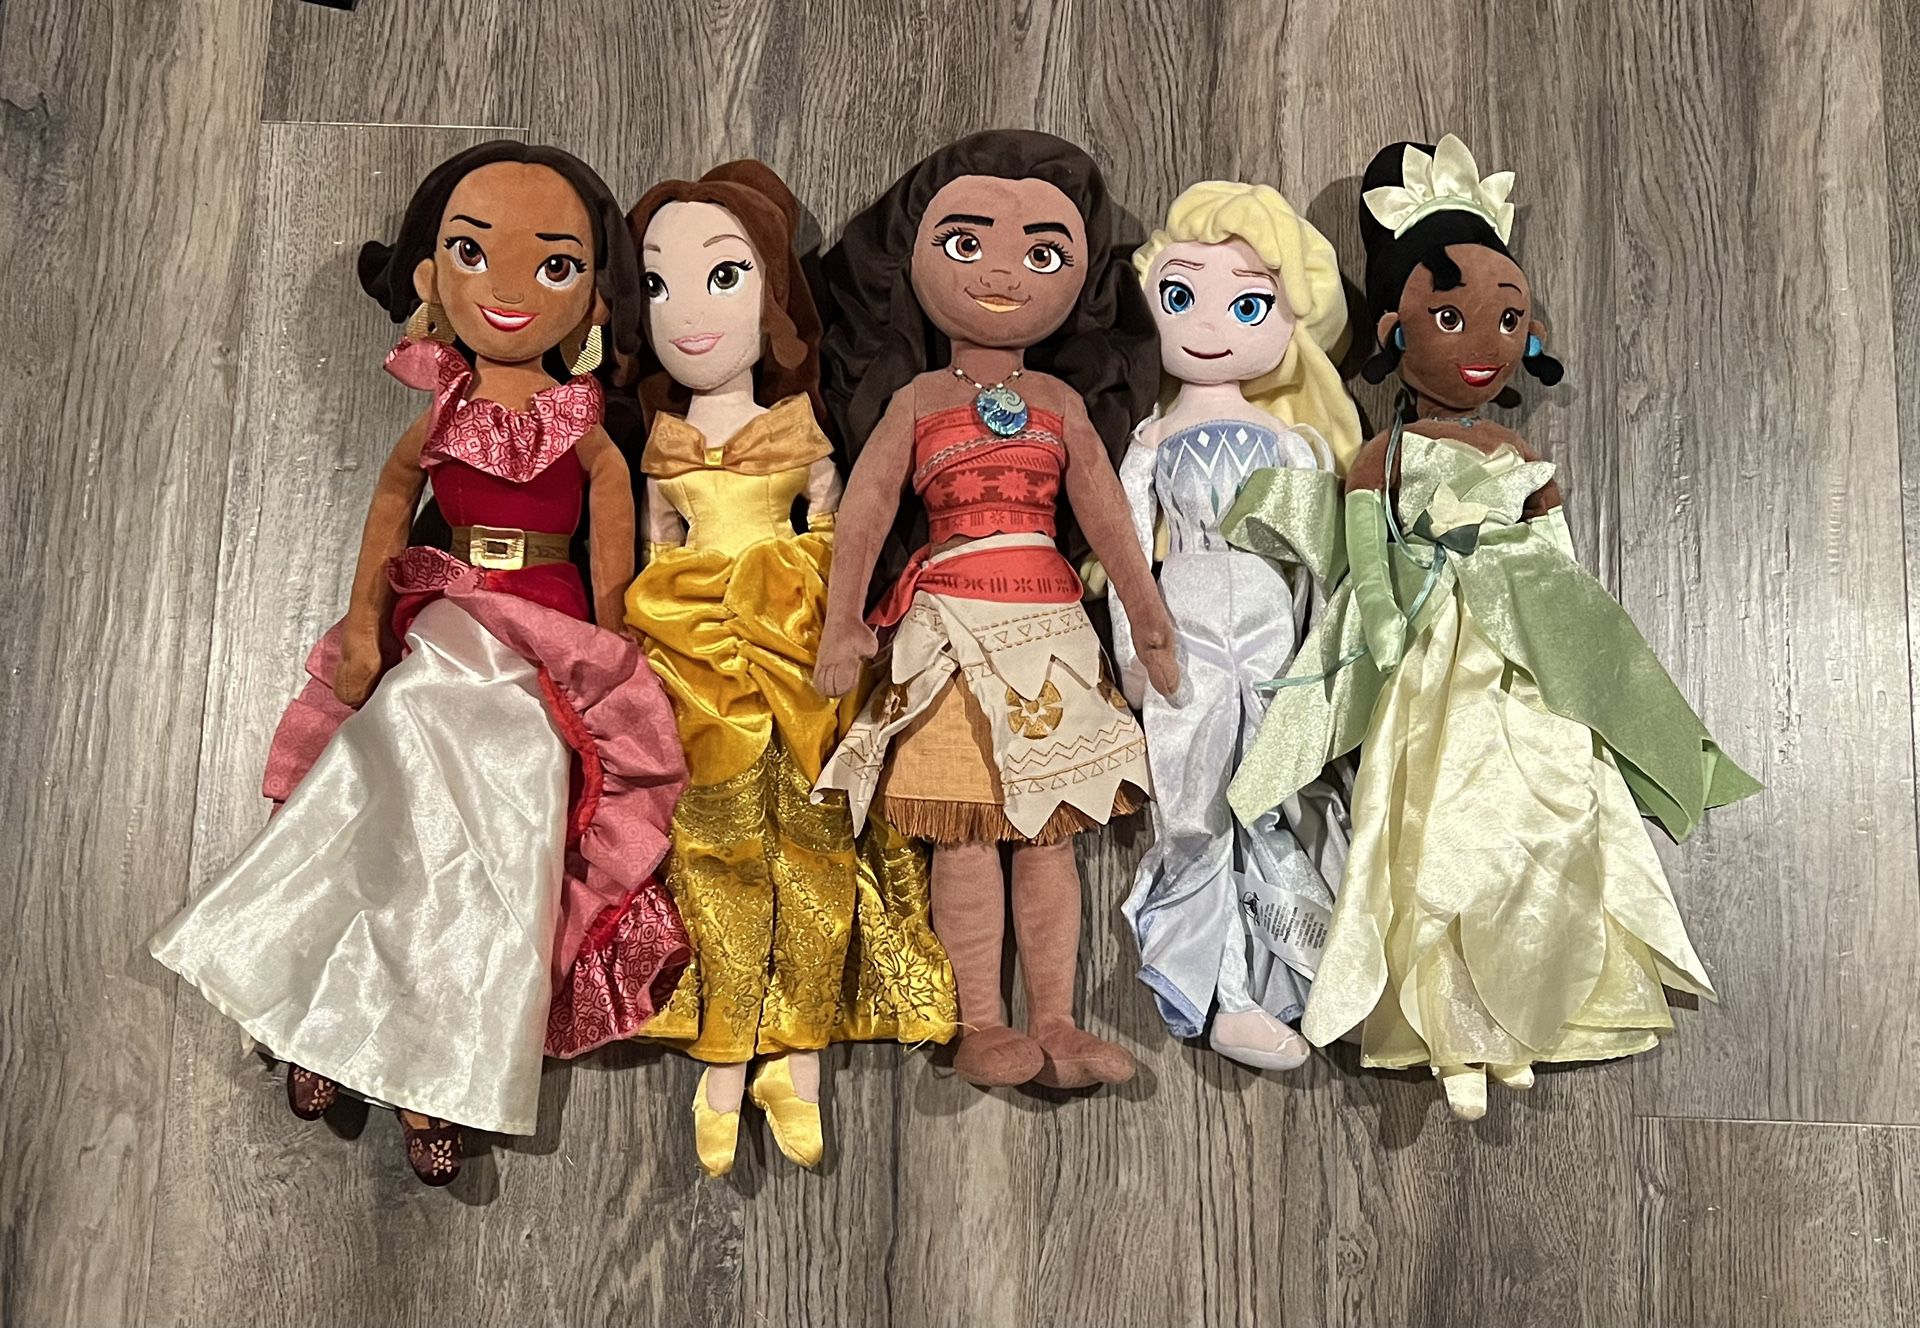 Lot of 5 Disney Plush Dolls. Elena, Moana, Belle, Tiana, and Elsa.